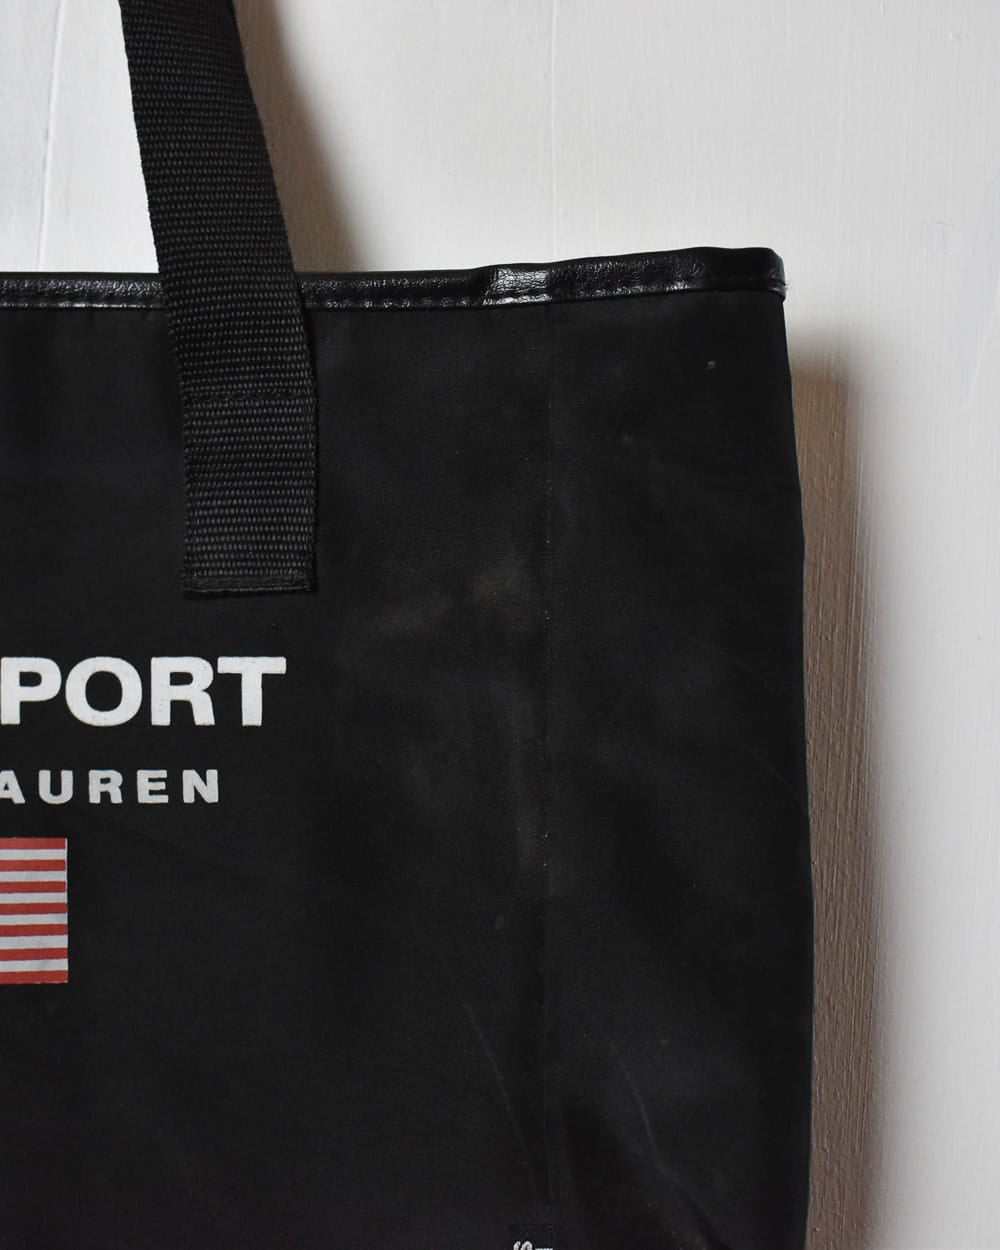  Polo Sport Ralph Lauren Tote Hand Bag